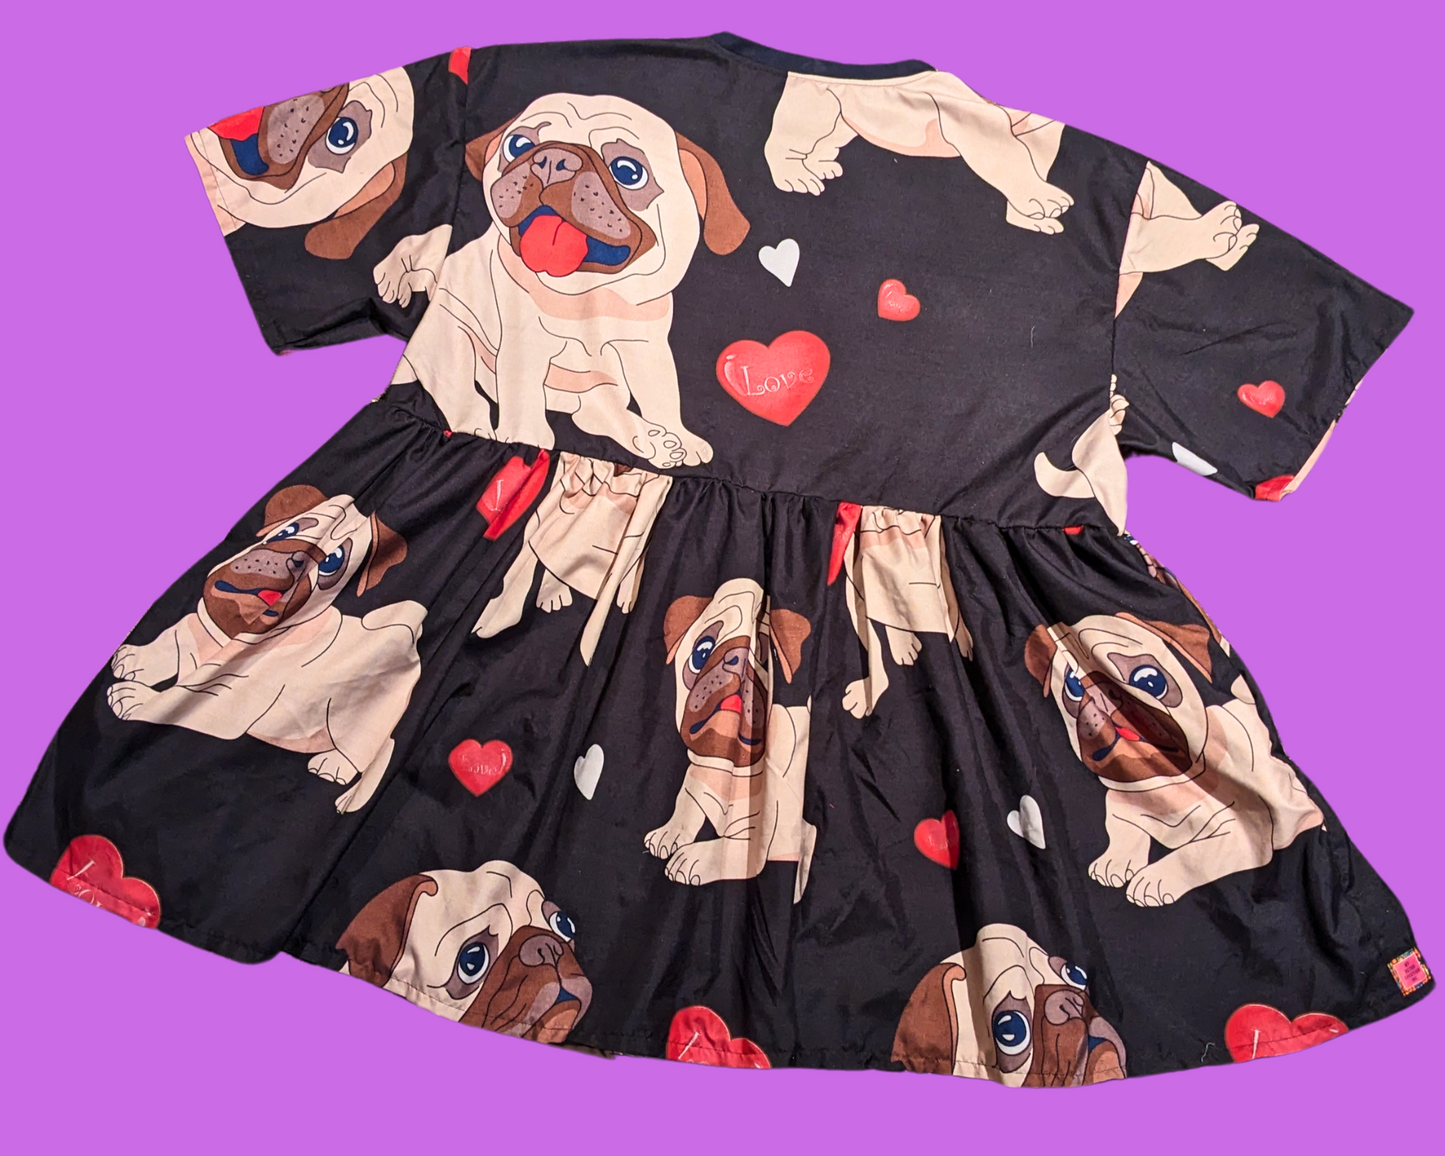 Handmade, Upcycled Pug Print Bedsheet T-Shirt Dress Fits 2XL